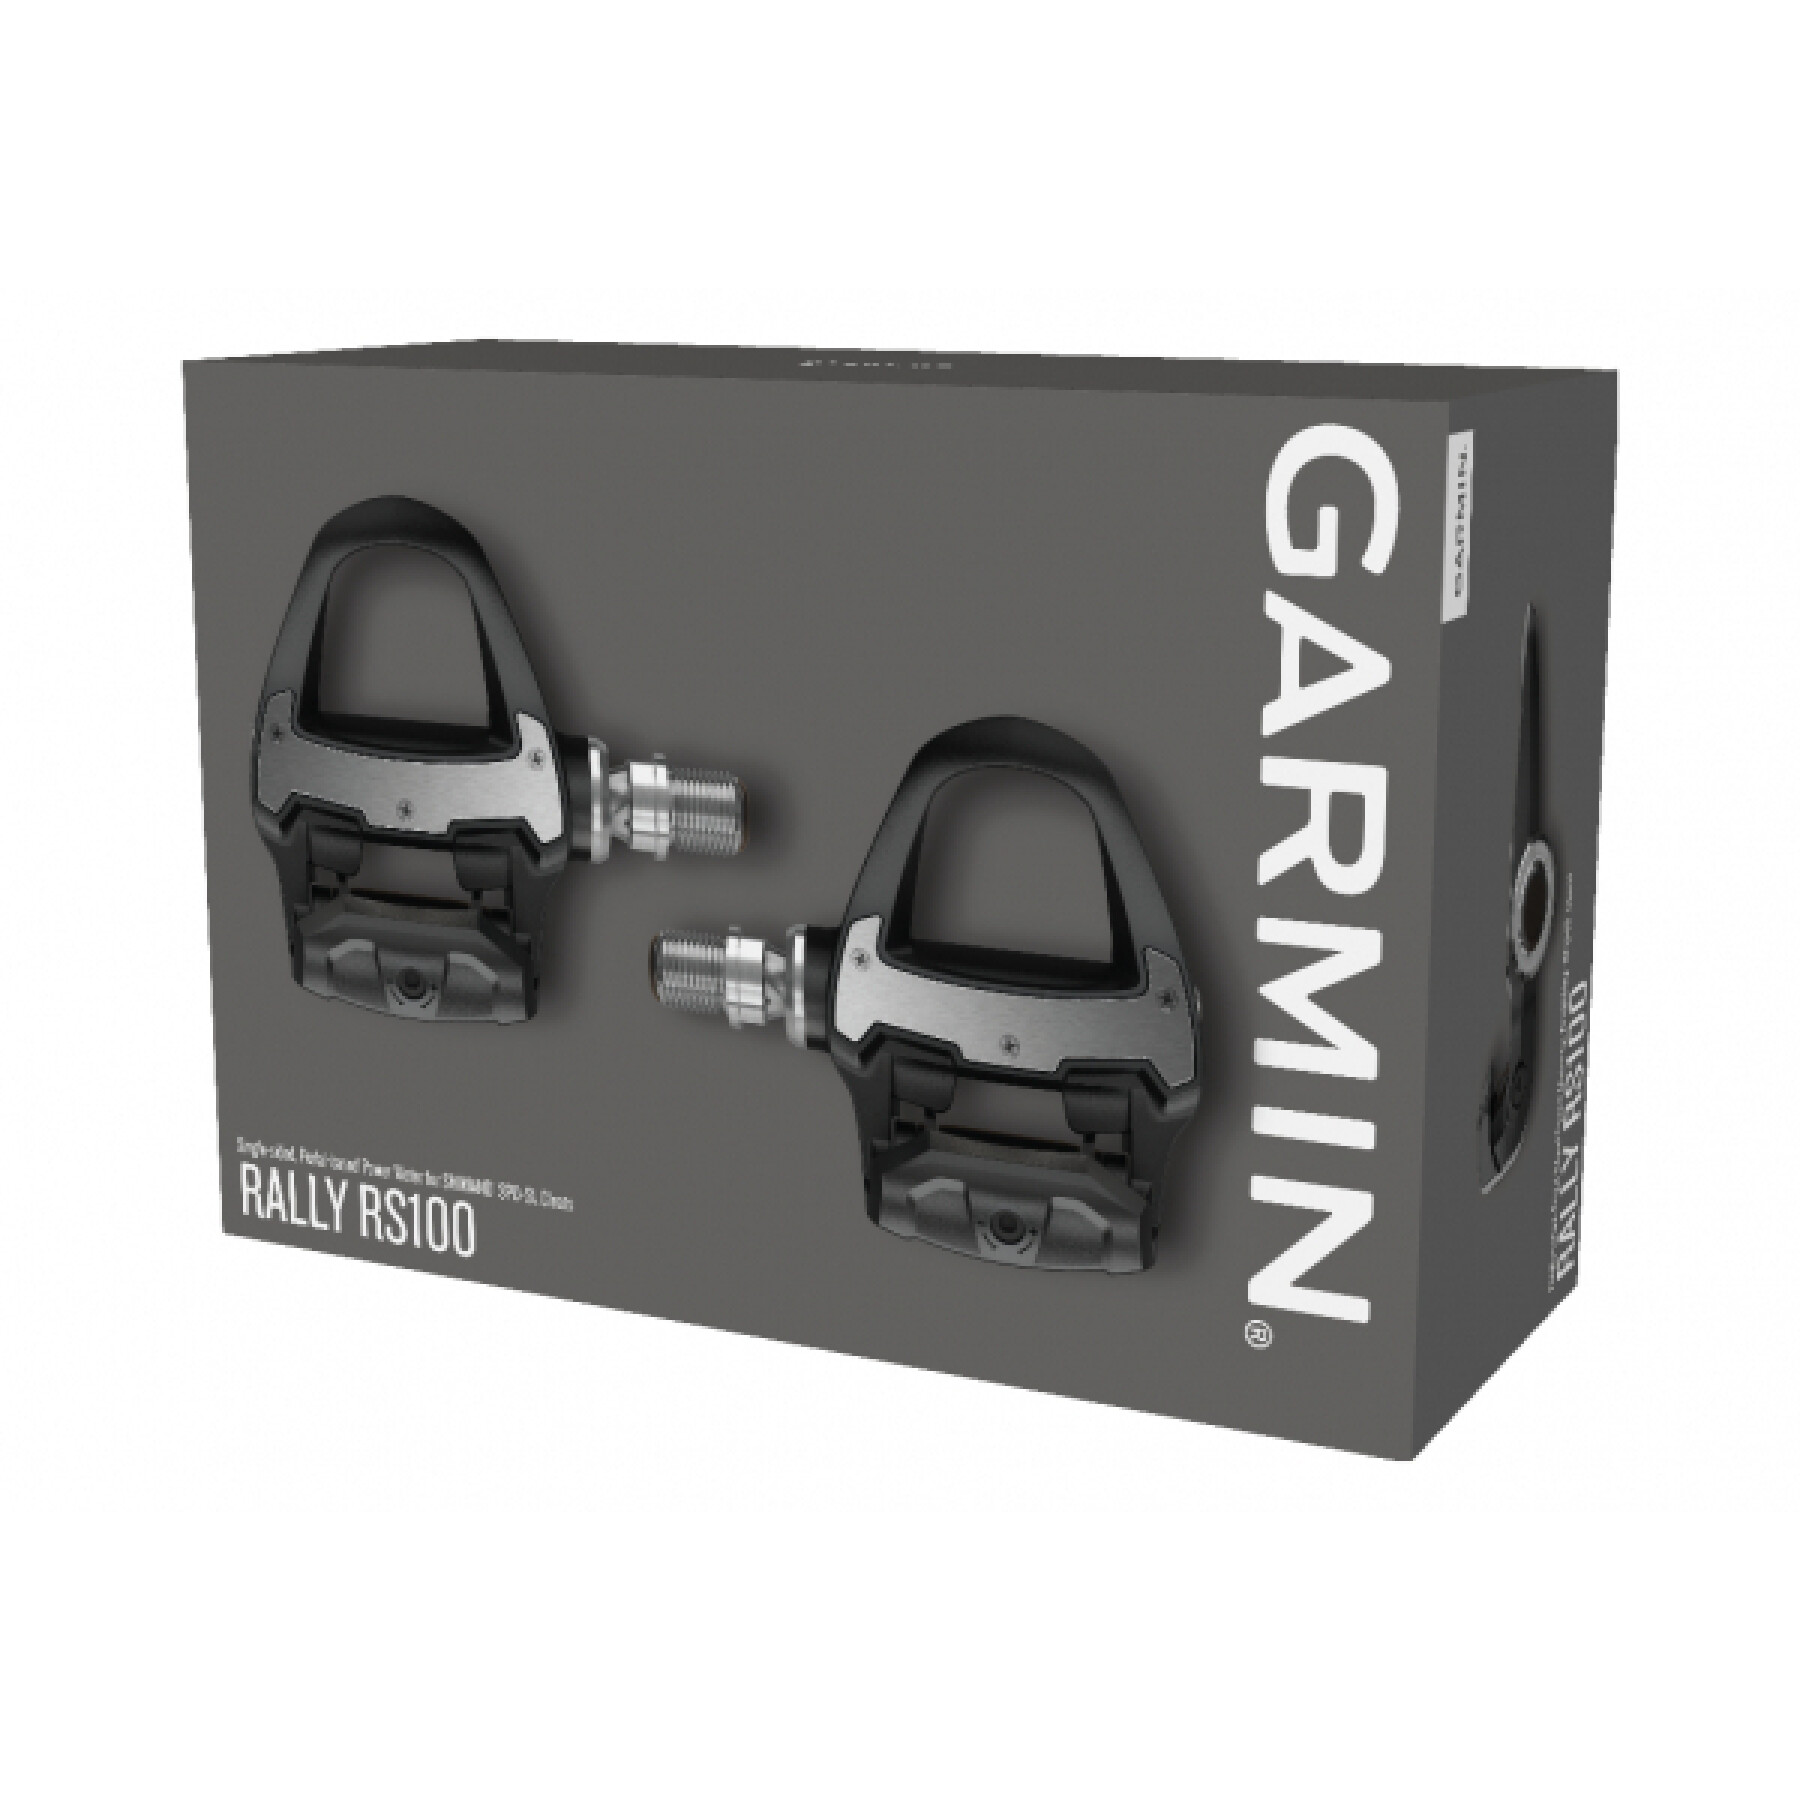 Sensore di potenza Garmin Rally rk 100 look kéo type